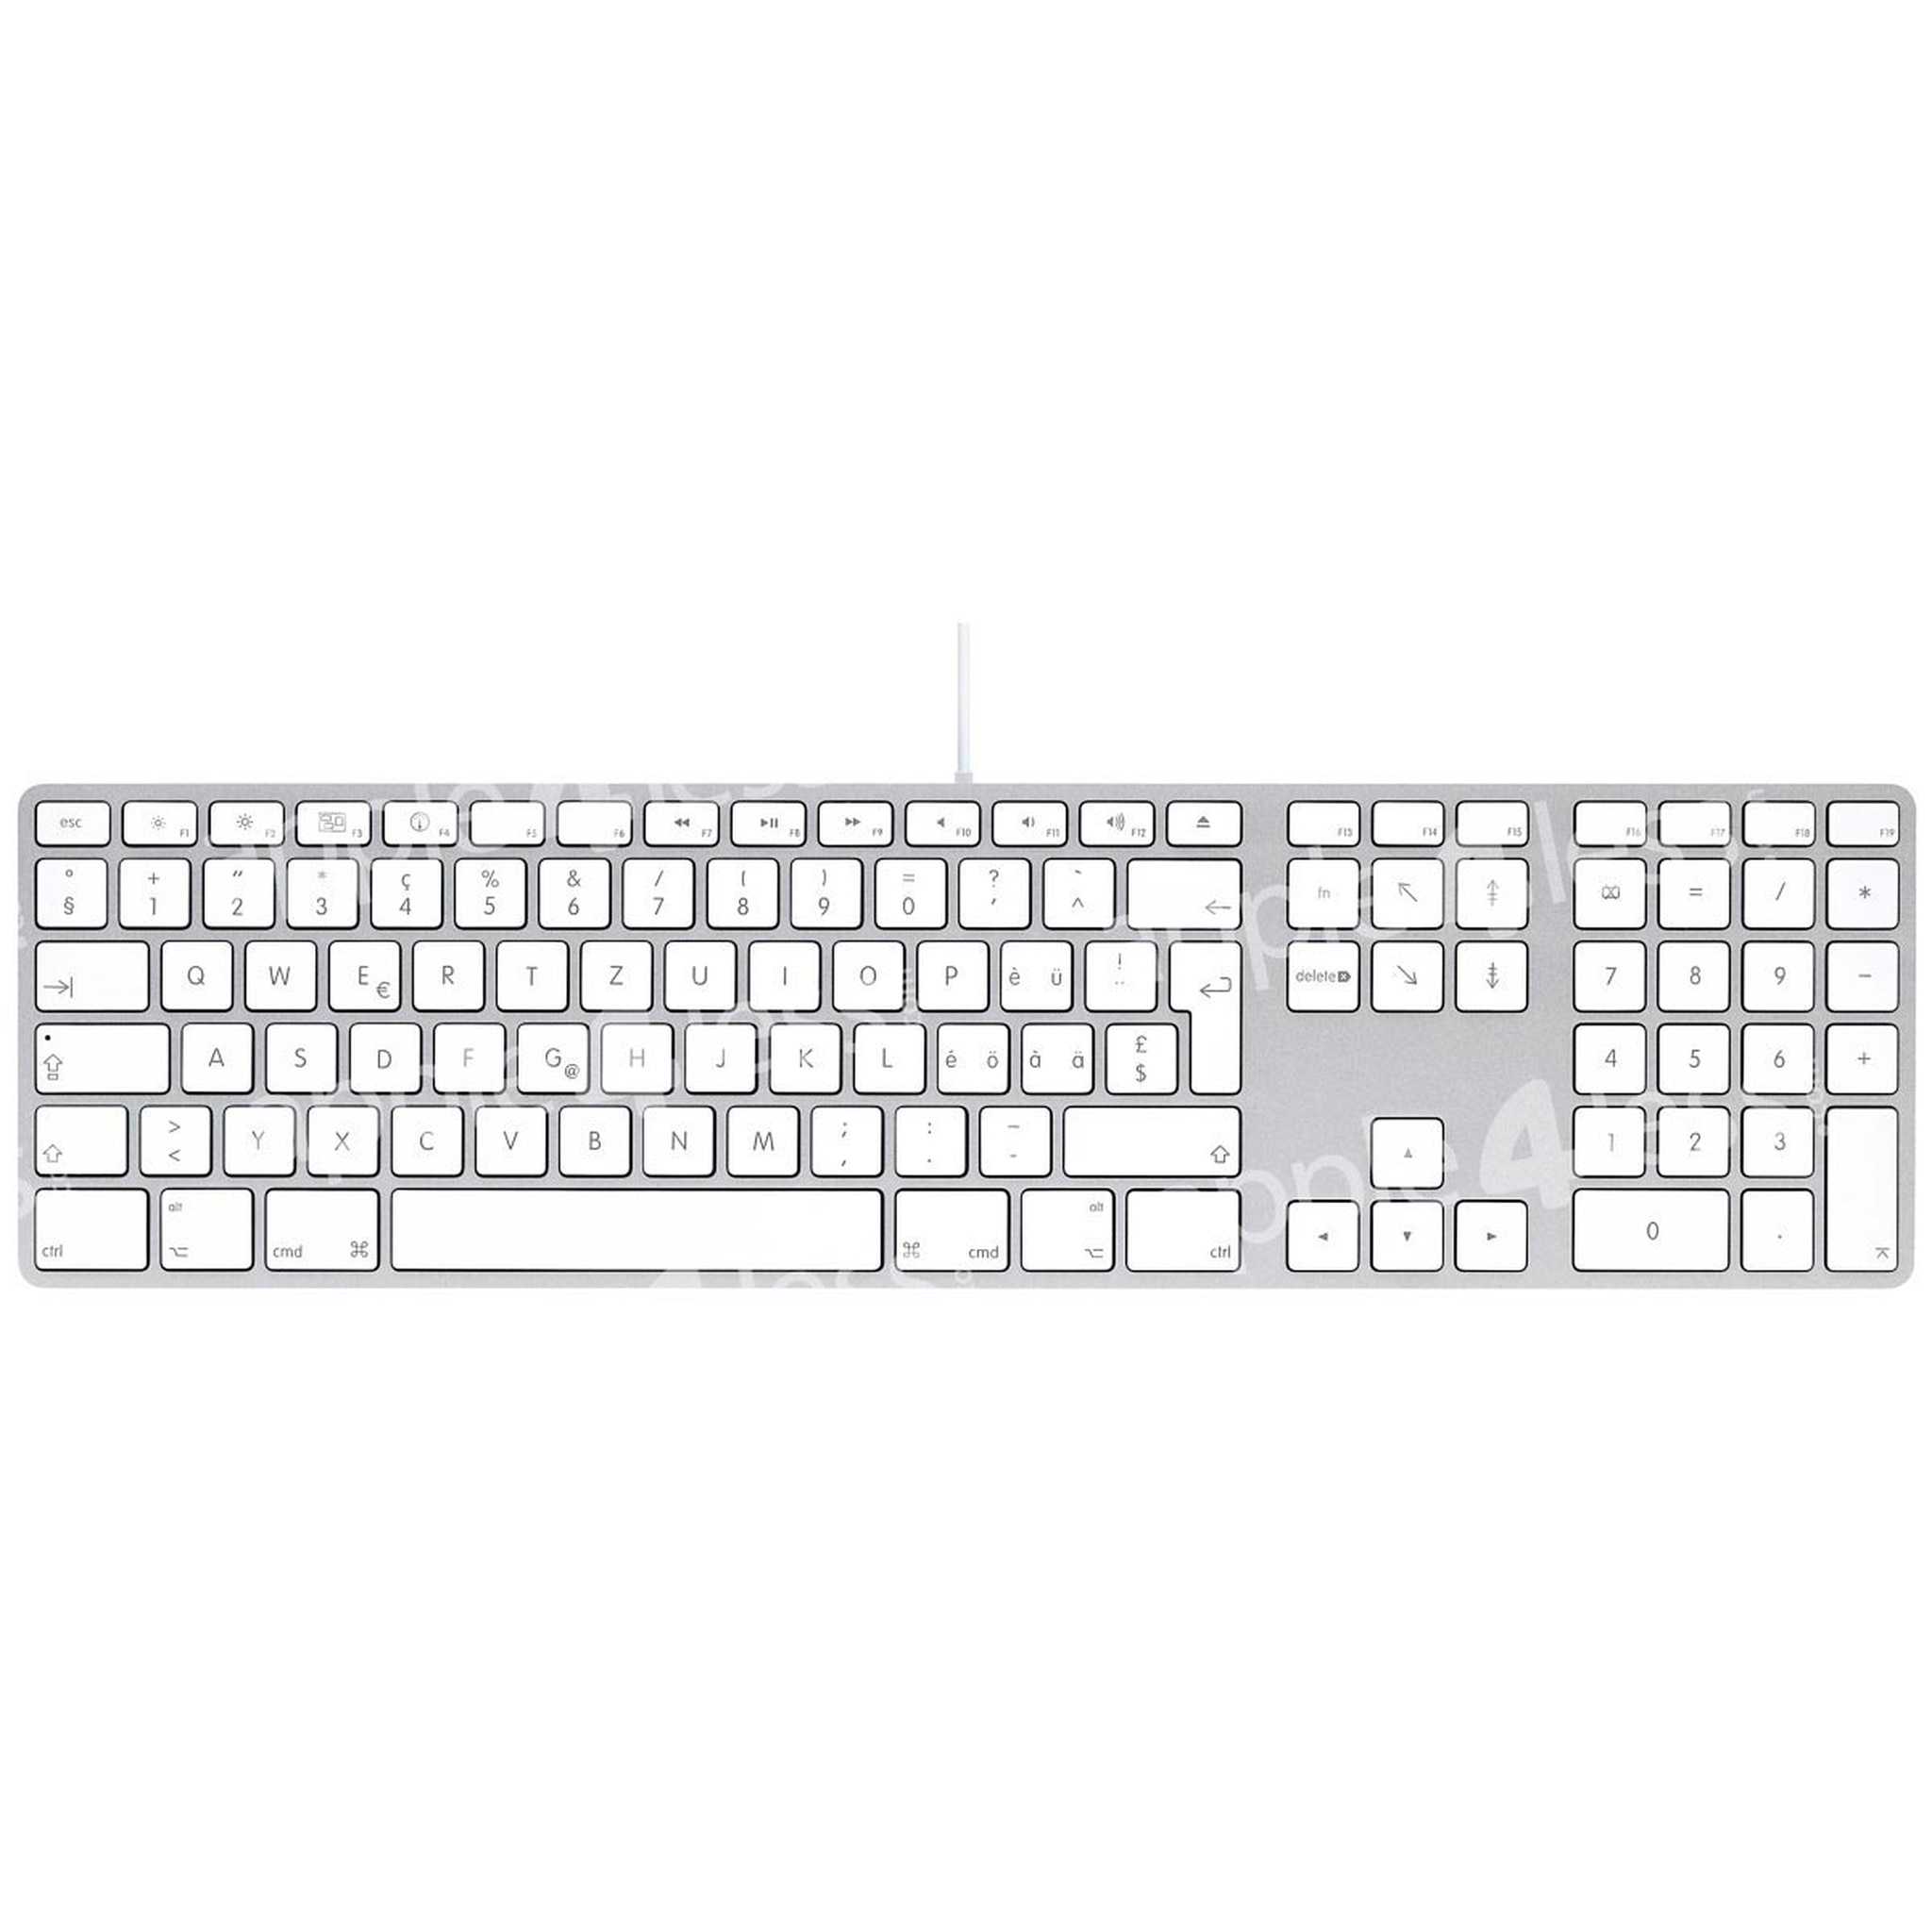 Apple mb110ru/b wired keyboard white usb (белый) - купить , скидки, цена, отзывы, обзор, характеристики - клавиатуры